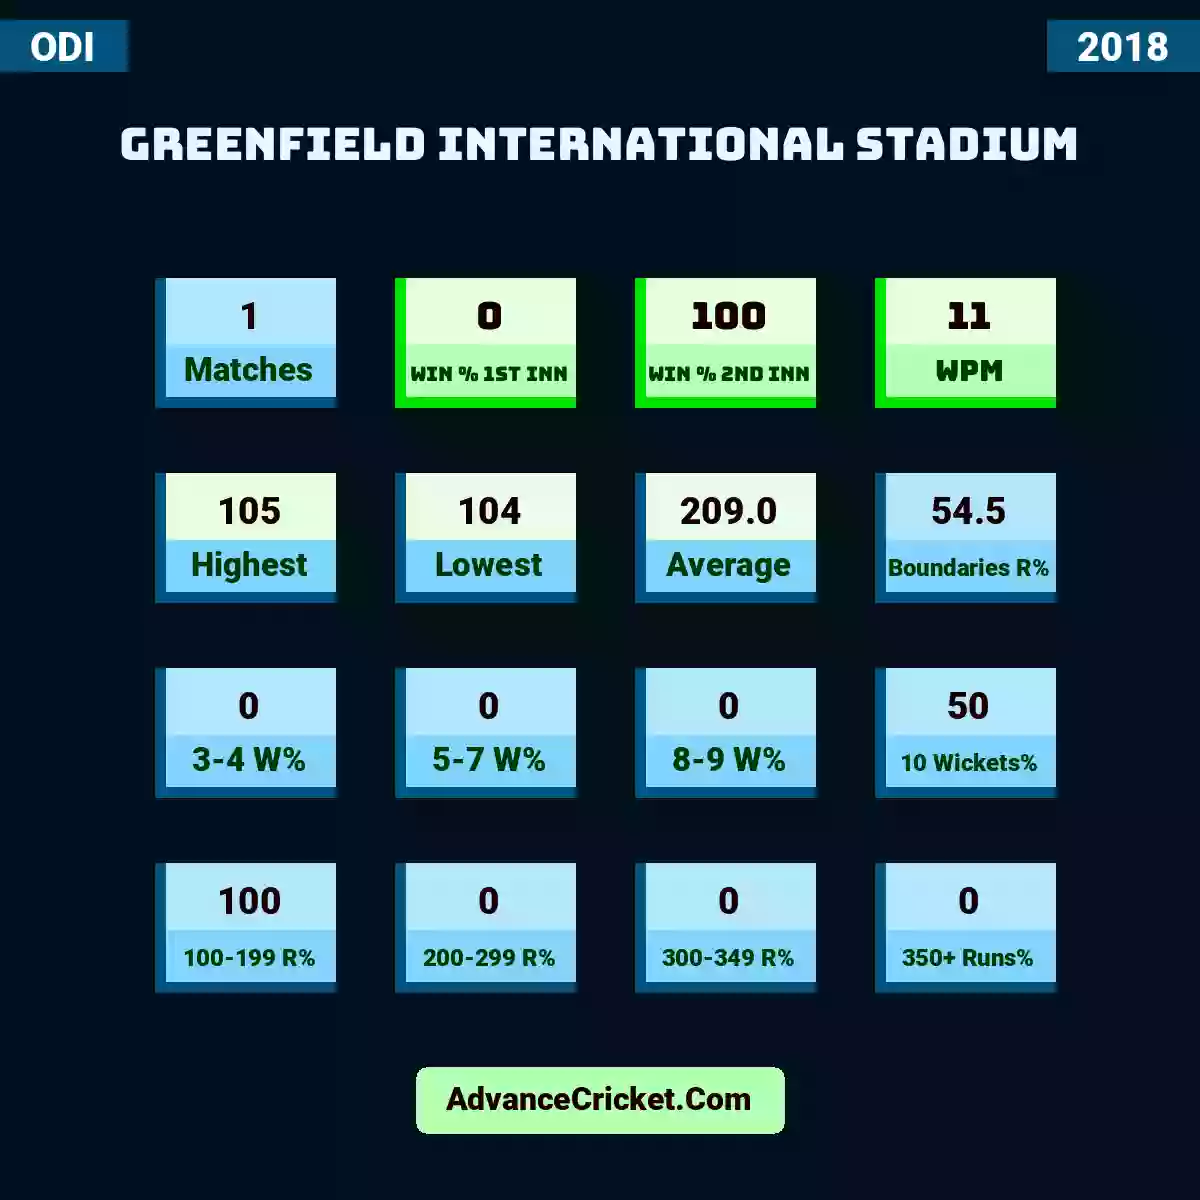 Image showing Greenfield International Stadium with Matches: 1, Win % 1st Inn: 0, Win % 2nd Inn: 100, WPM: 11, Highest: 105, Lowest: 104, Average: 209.0, Boundaries R%: 54.5, 3-4 W%: 0, 5-7 W%: 0, 8-9 W%: 0, 10 Wickets%: 50, 100-199 R%: 100, 200-299 R%: 0, 300-349 R%: 0, 350+ Runs%: 0.